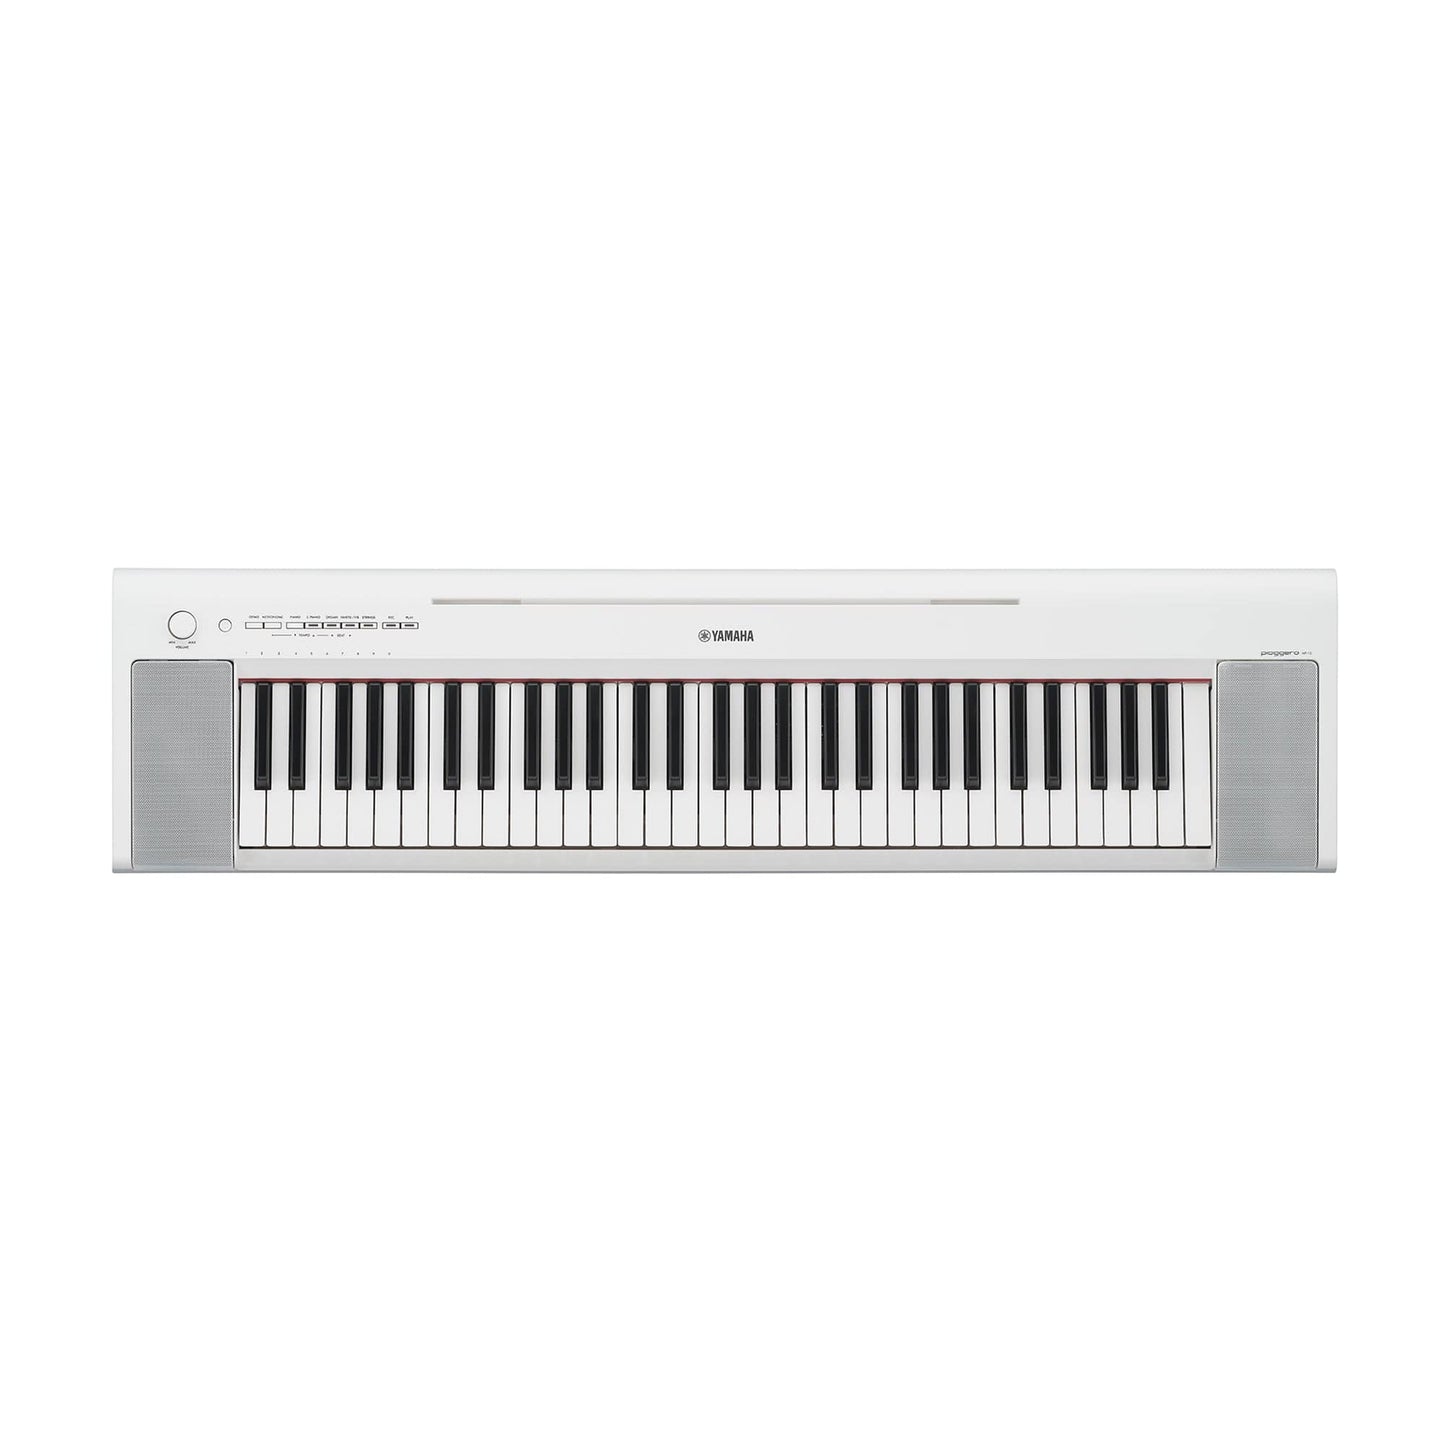 Yamaha Piaggero NP-15 61-key Ultra Portable Digital Piano White Keyboards and Synths / Electric Pianos